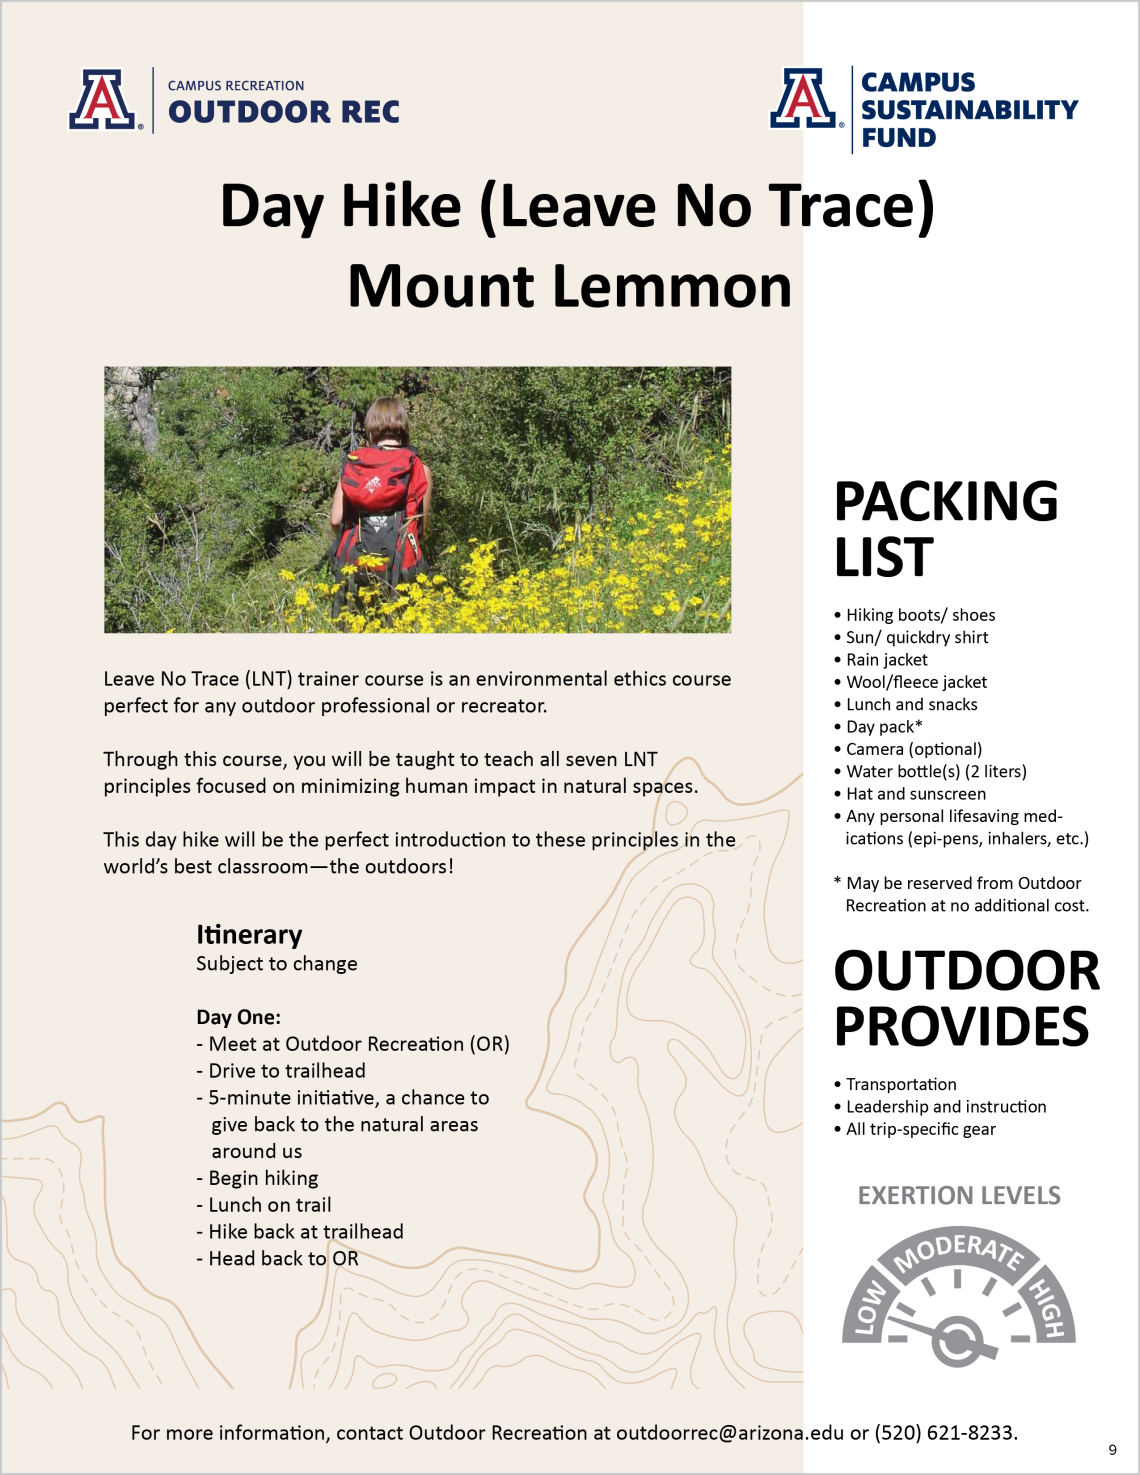 Day Hike - Mount Lemmon 